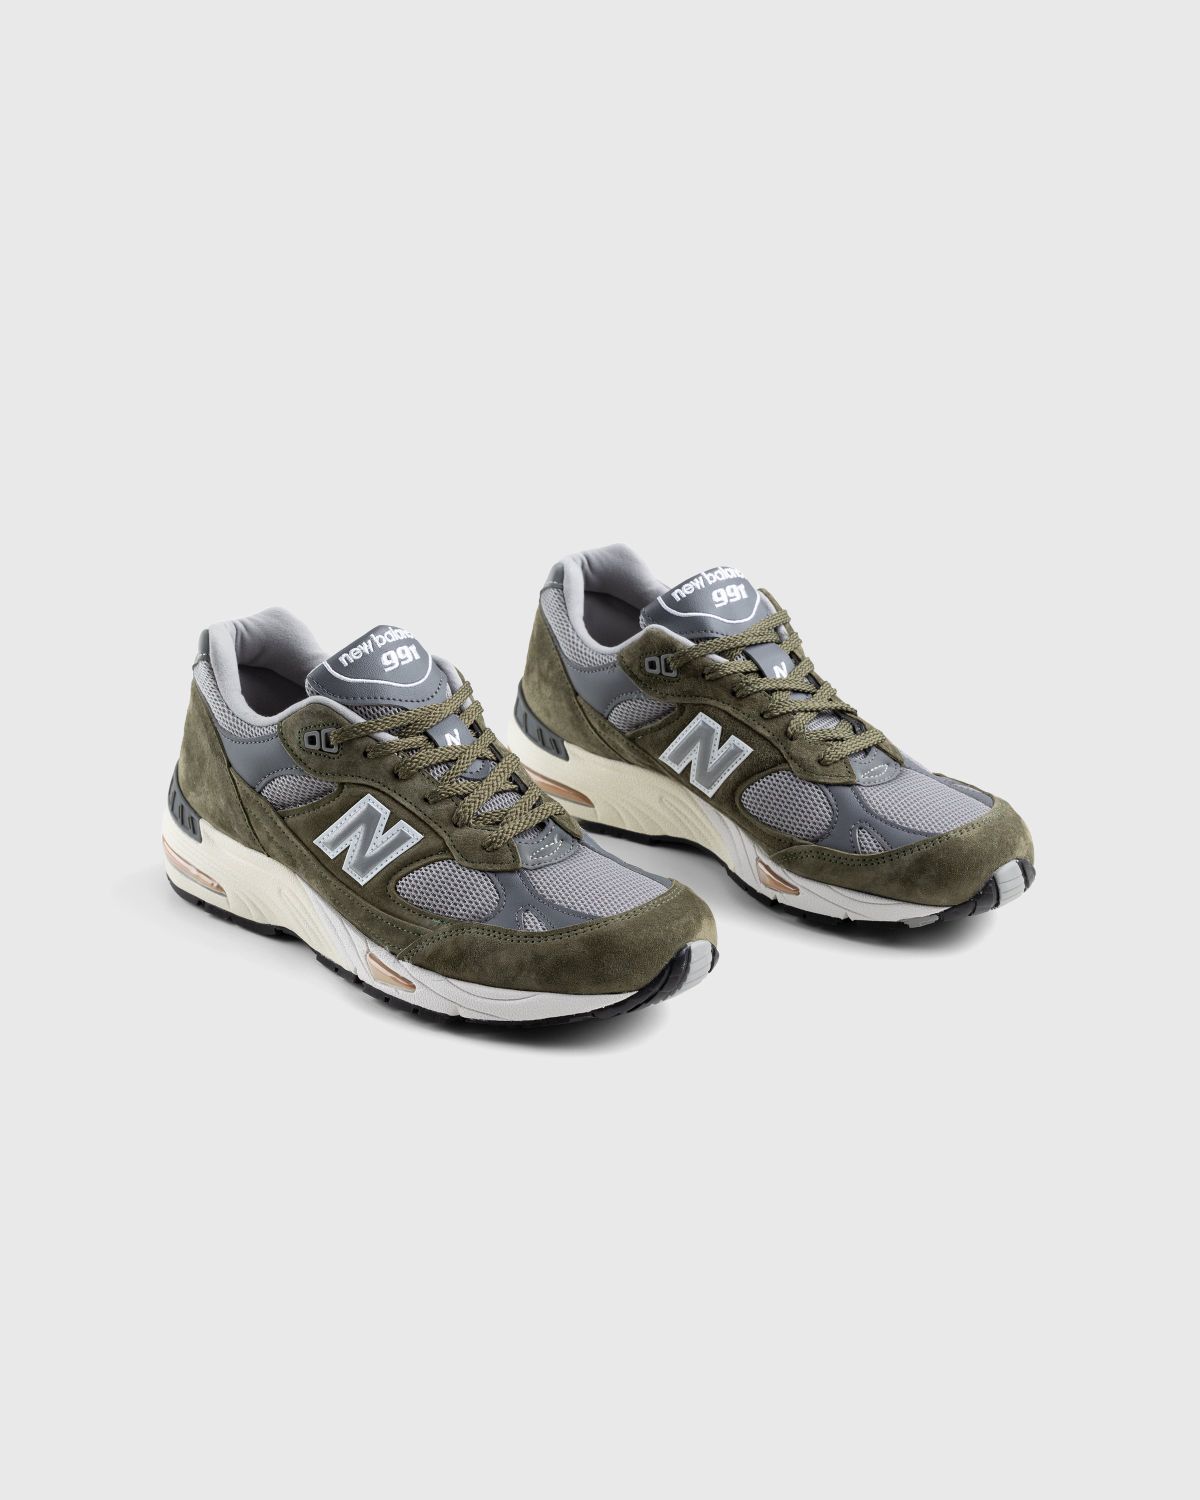 New Balance – M991GGT Green/Grey/Tan - Sneakers - Green - Image 3